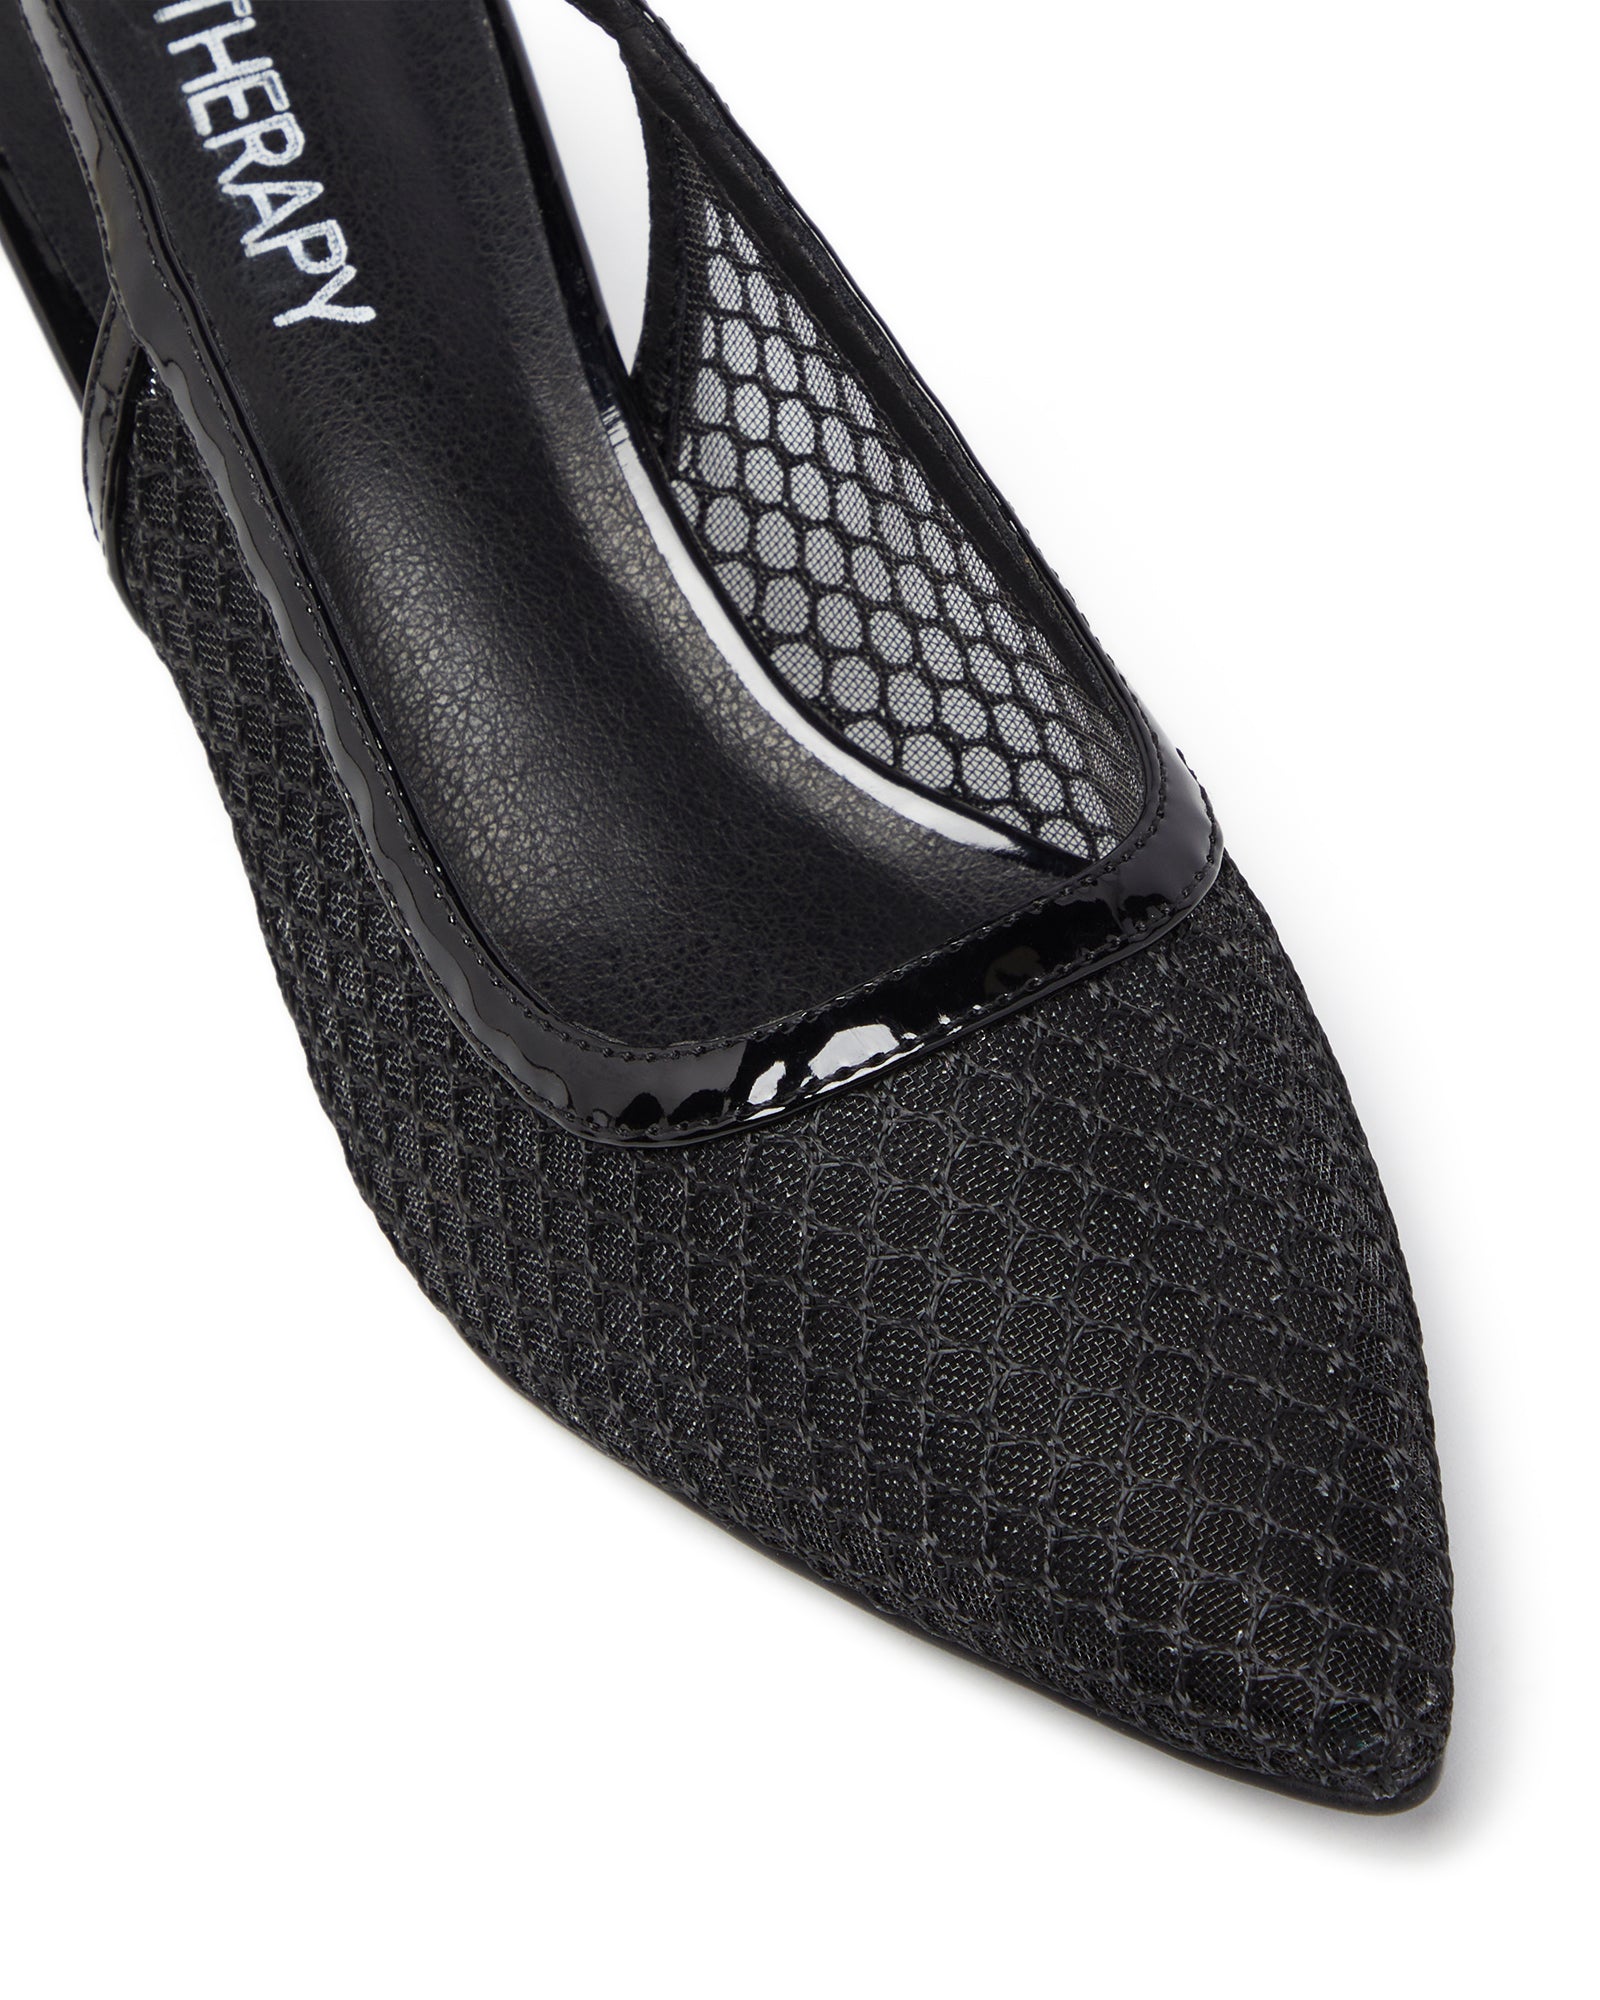 Therapy Shoes Bentleyy Black Patent | Women's Heels | Slingback | Pump | Stiletto